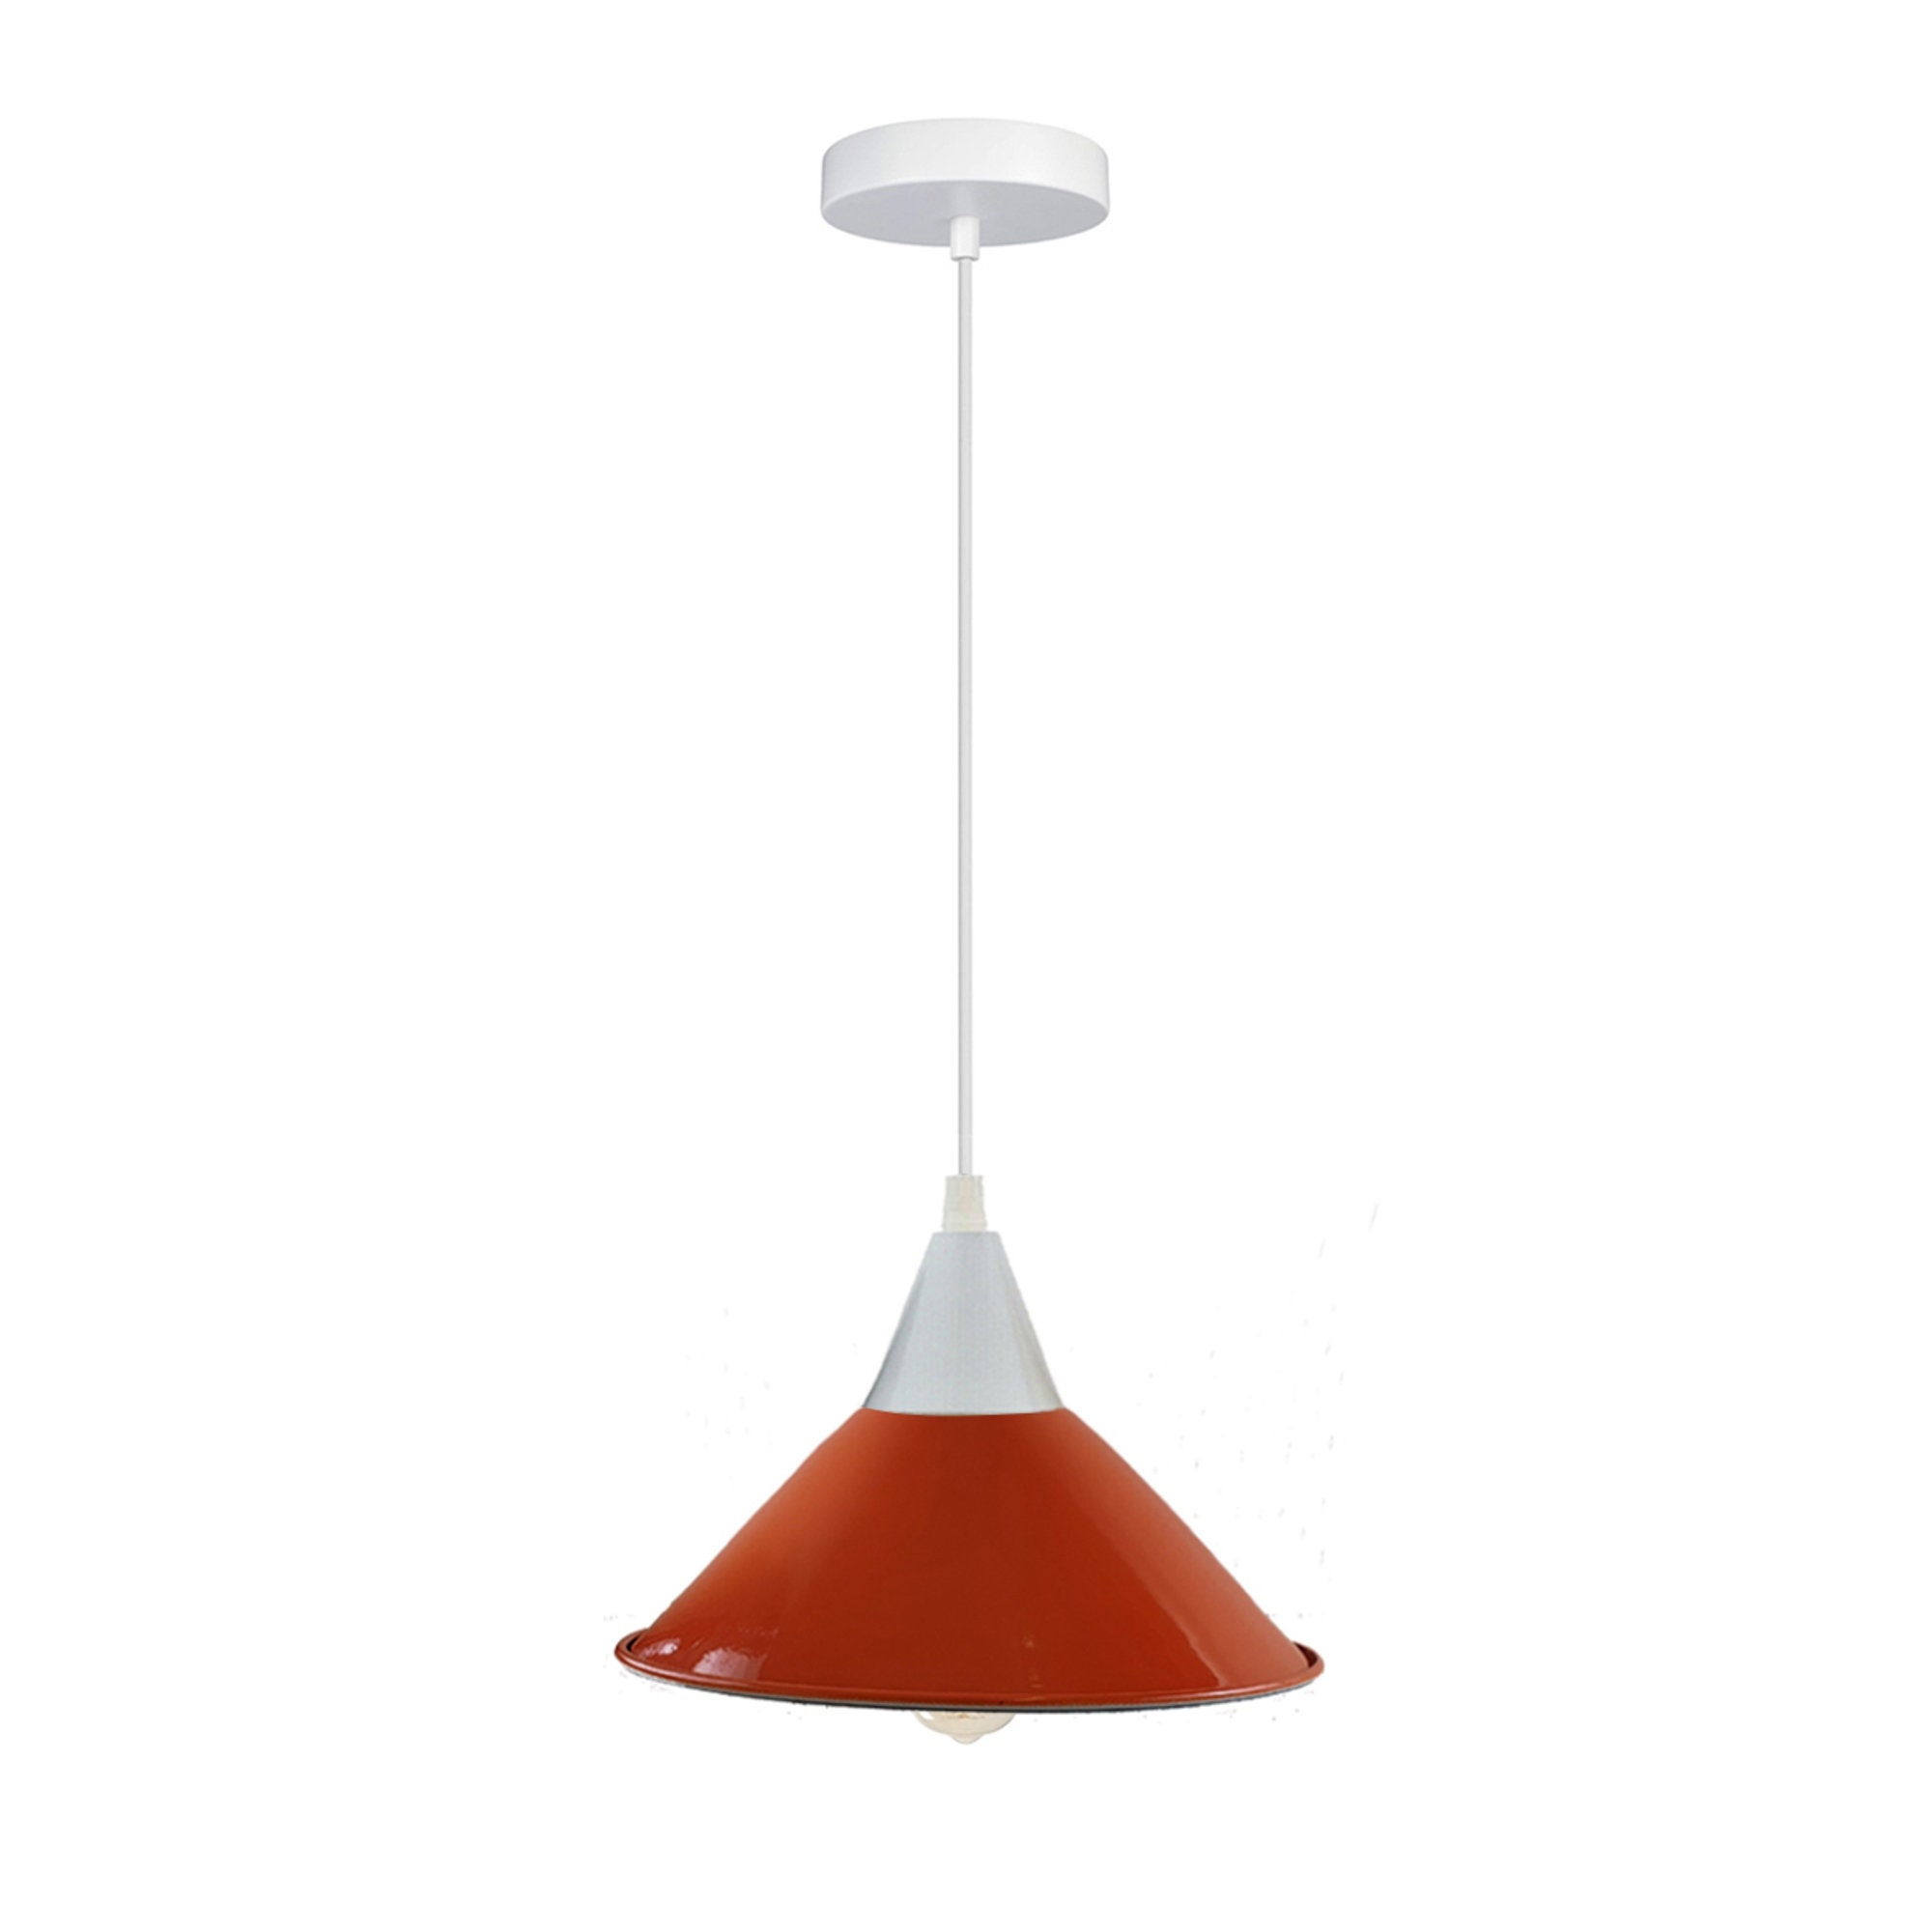 Red Pendant Light Ceiling Lamp Fixture Retro Metal Lamp - Etsy